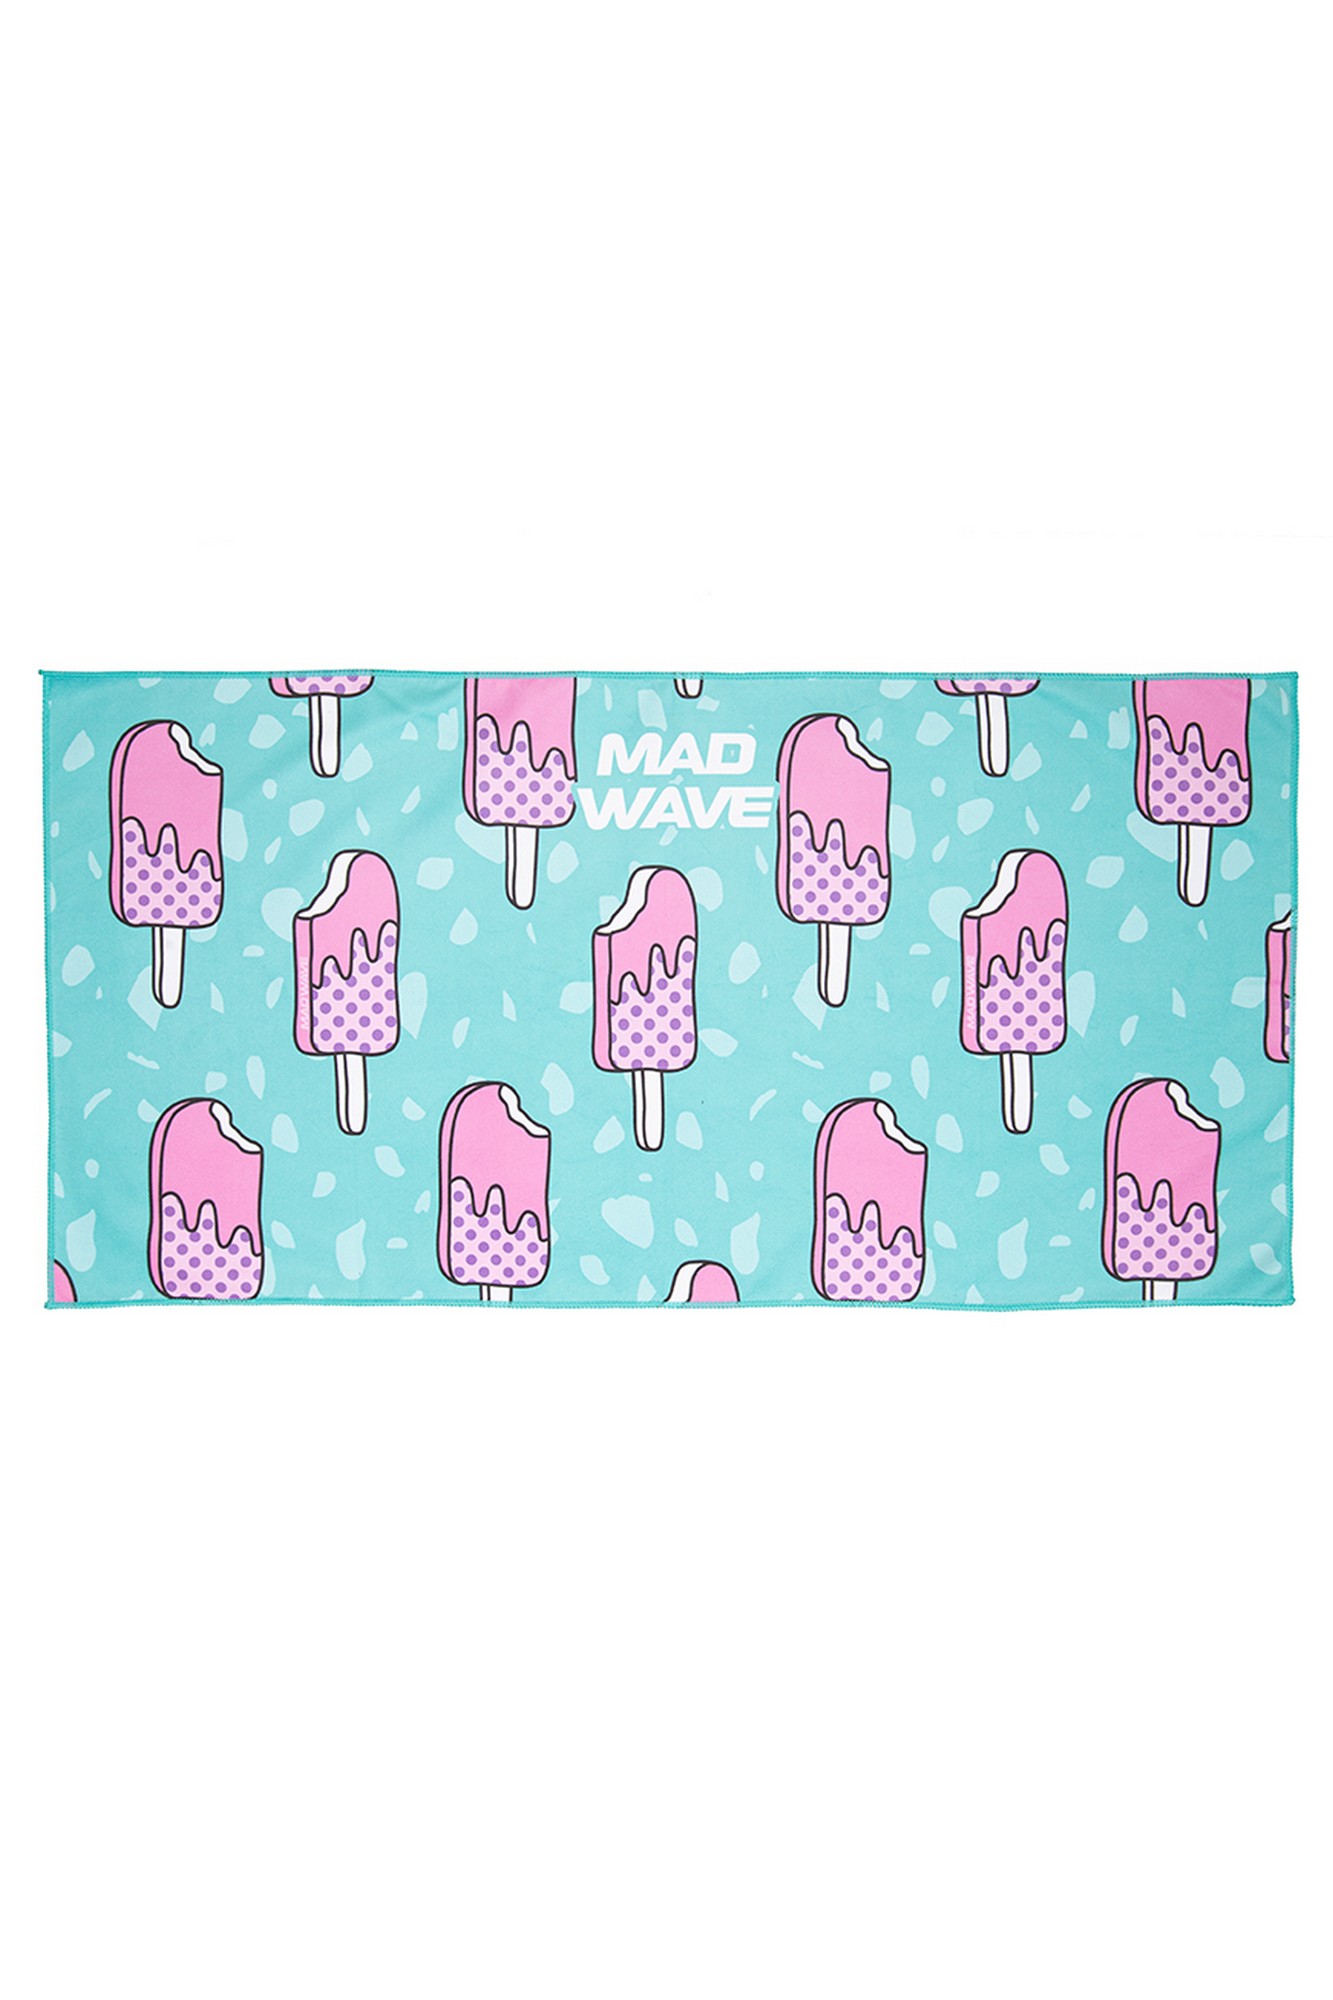    Mad Wave Ice Cream M0763 03 1 00W 